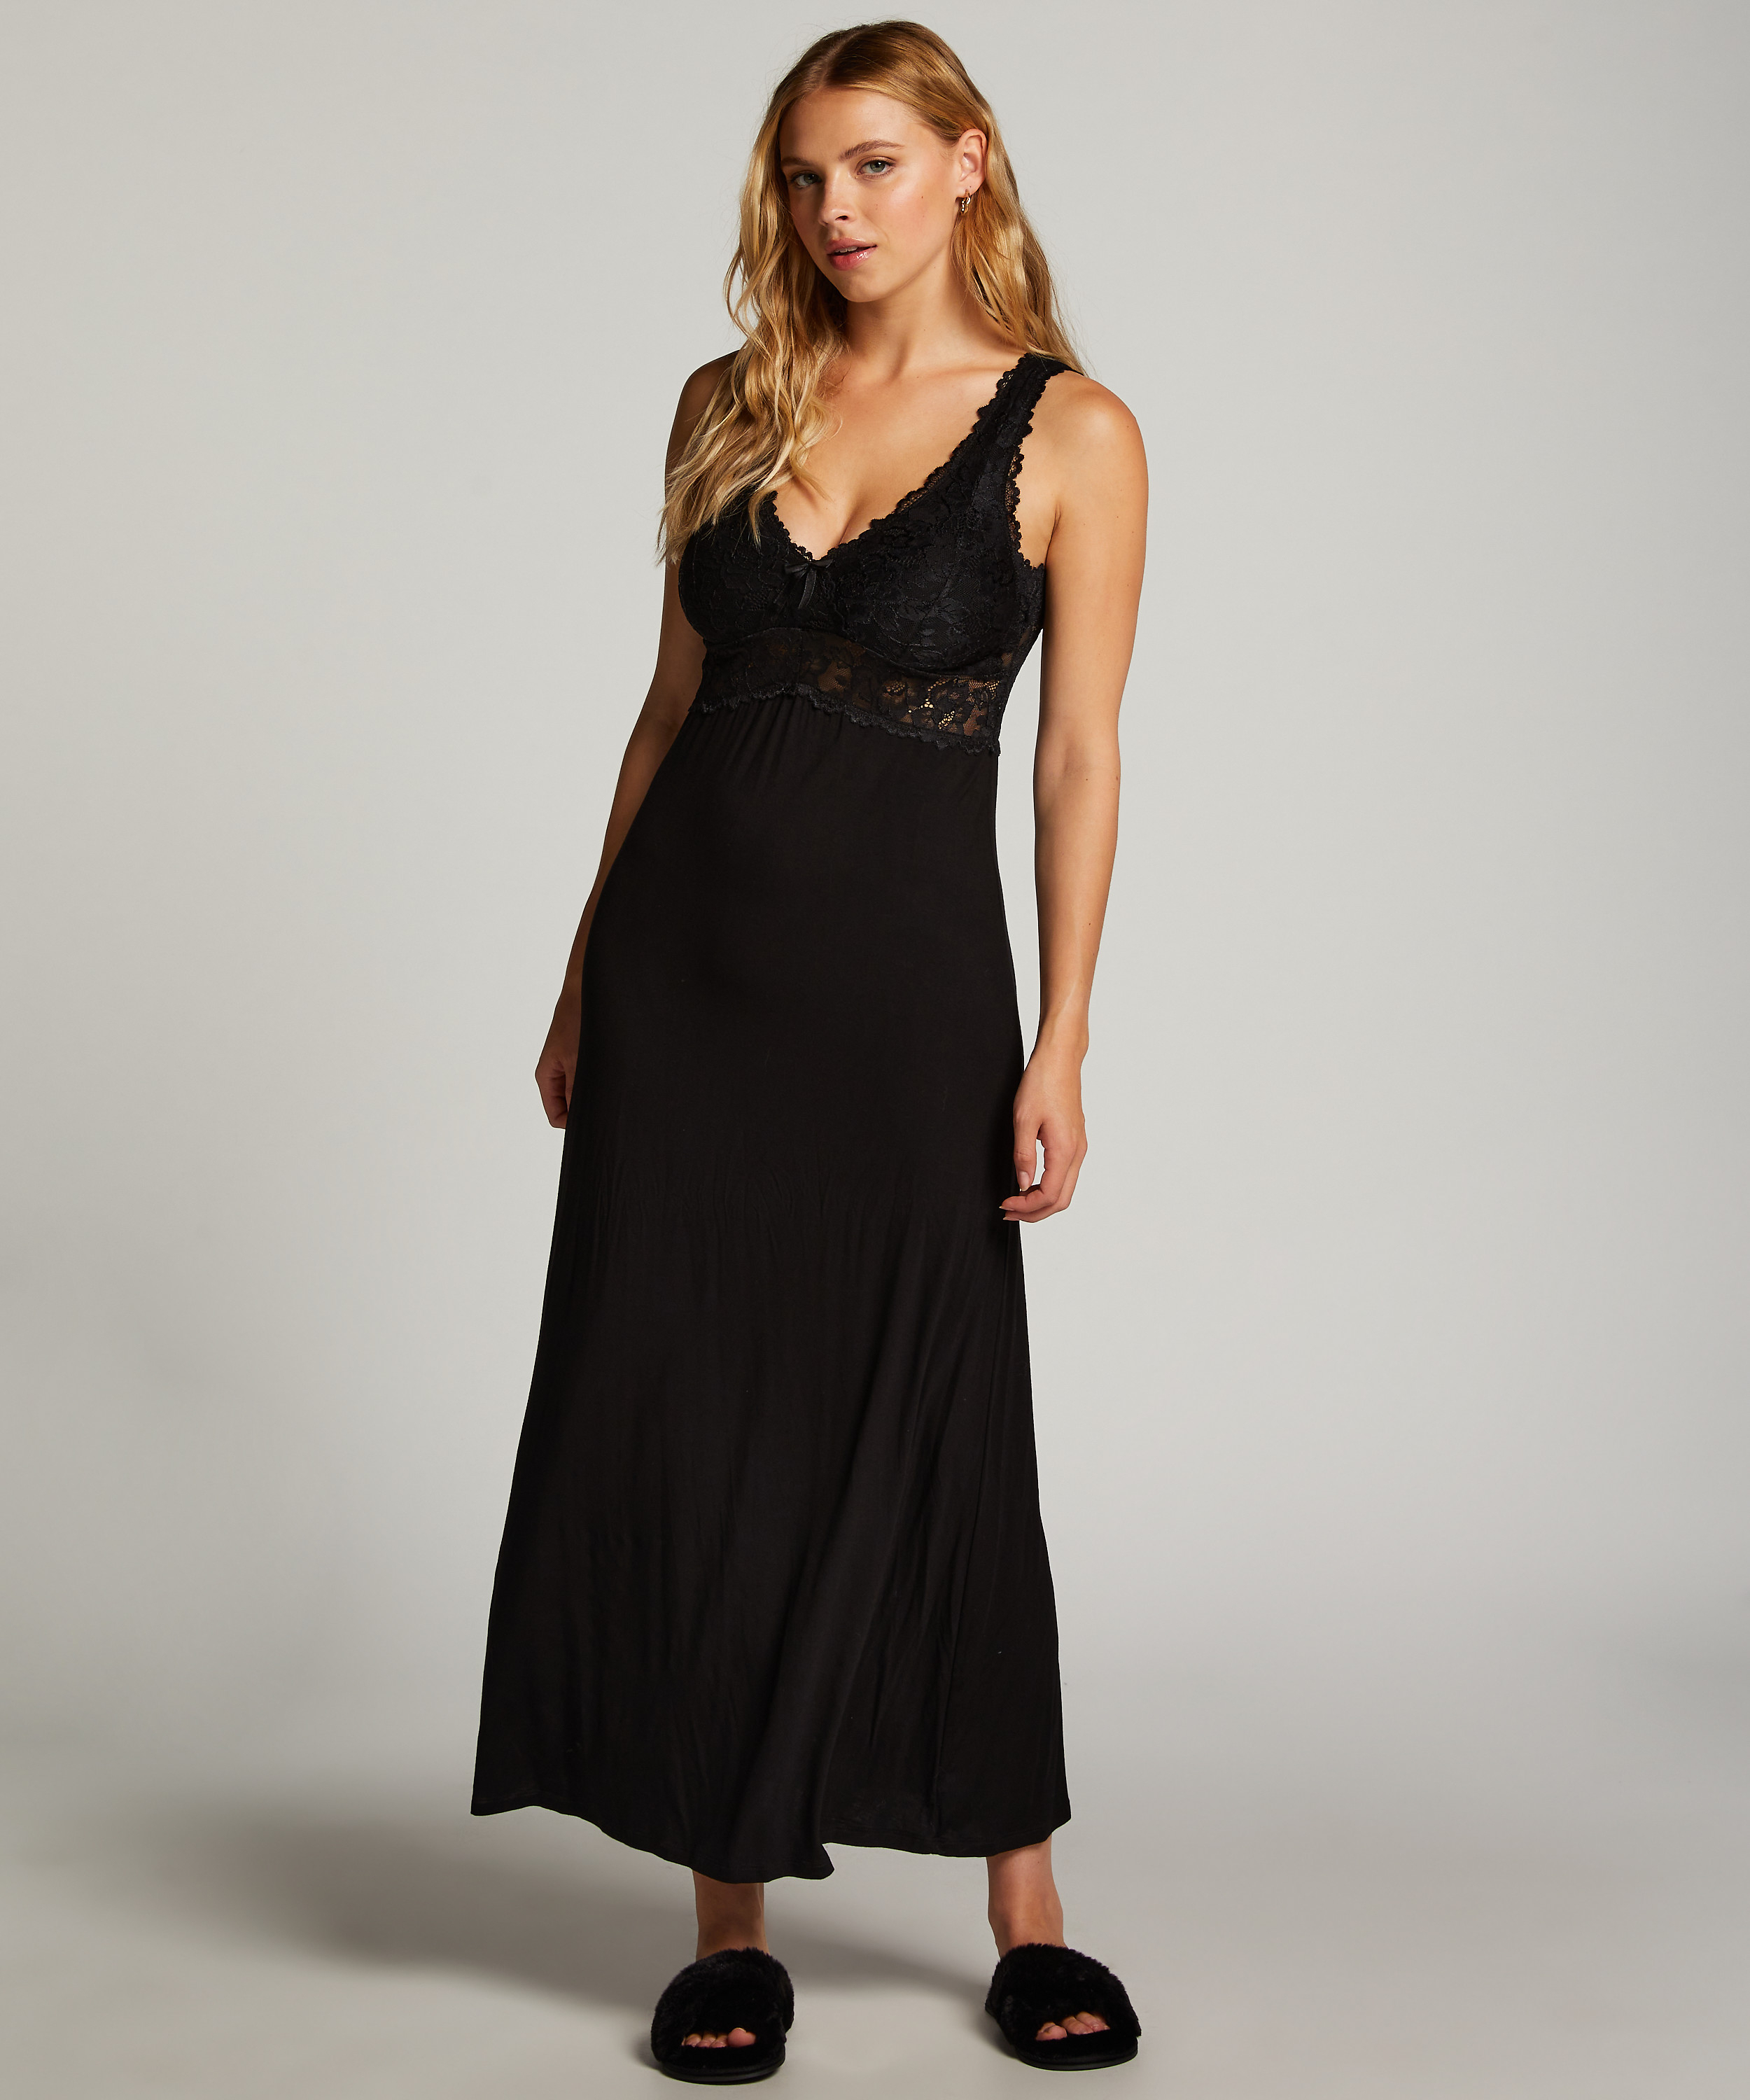 Nora Lace Long Slip Dress, Black, main